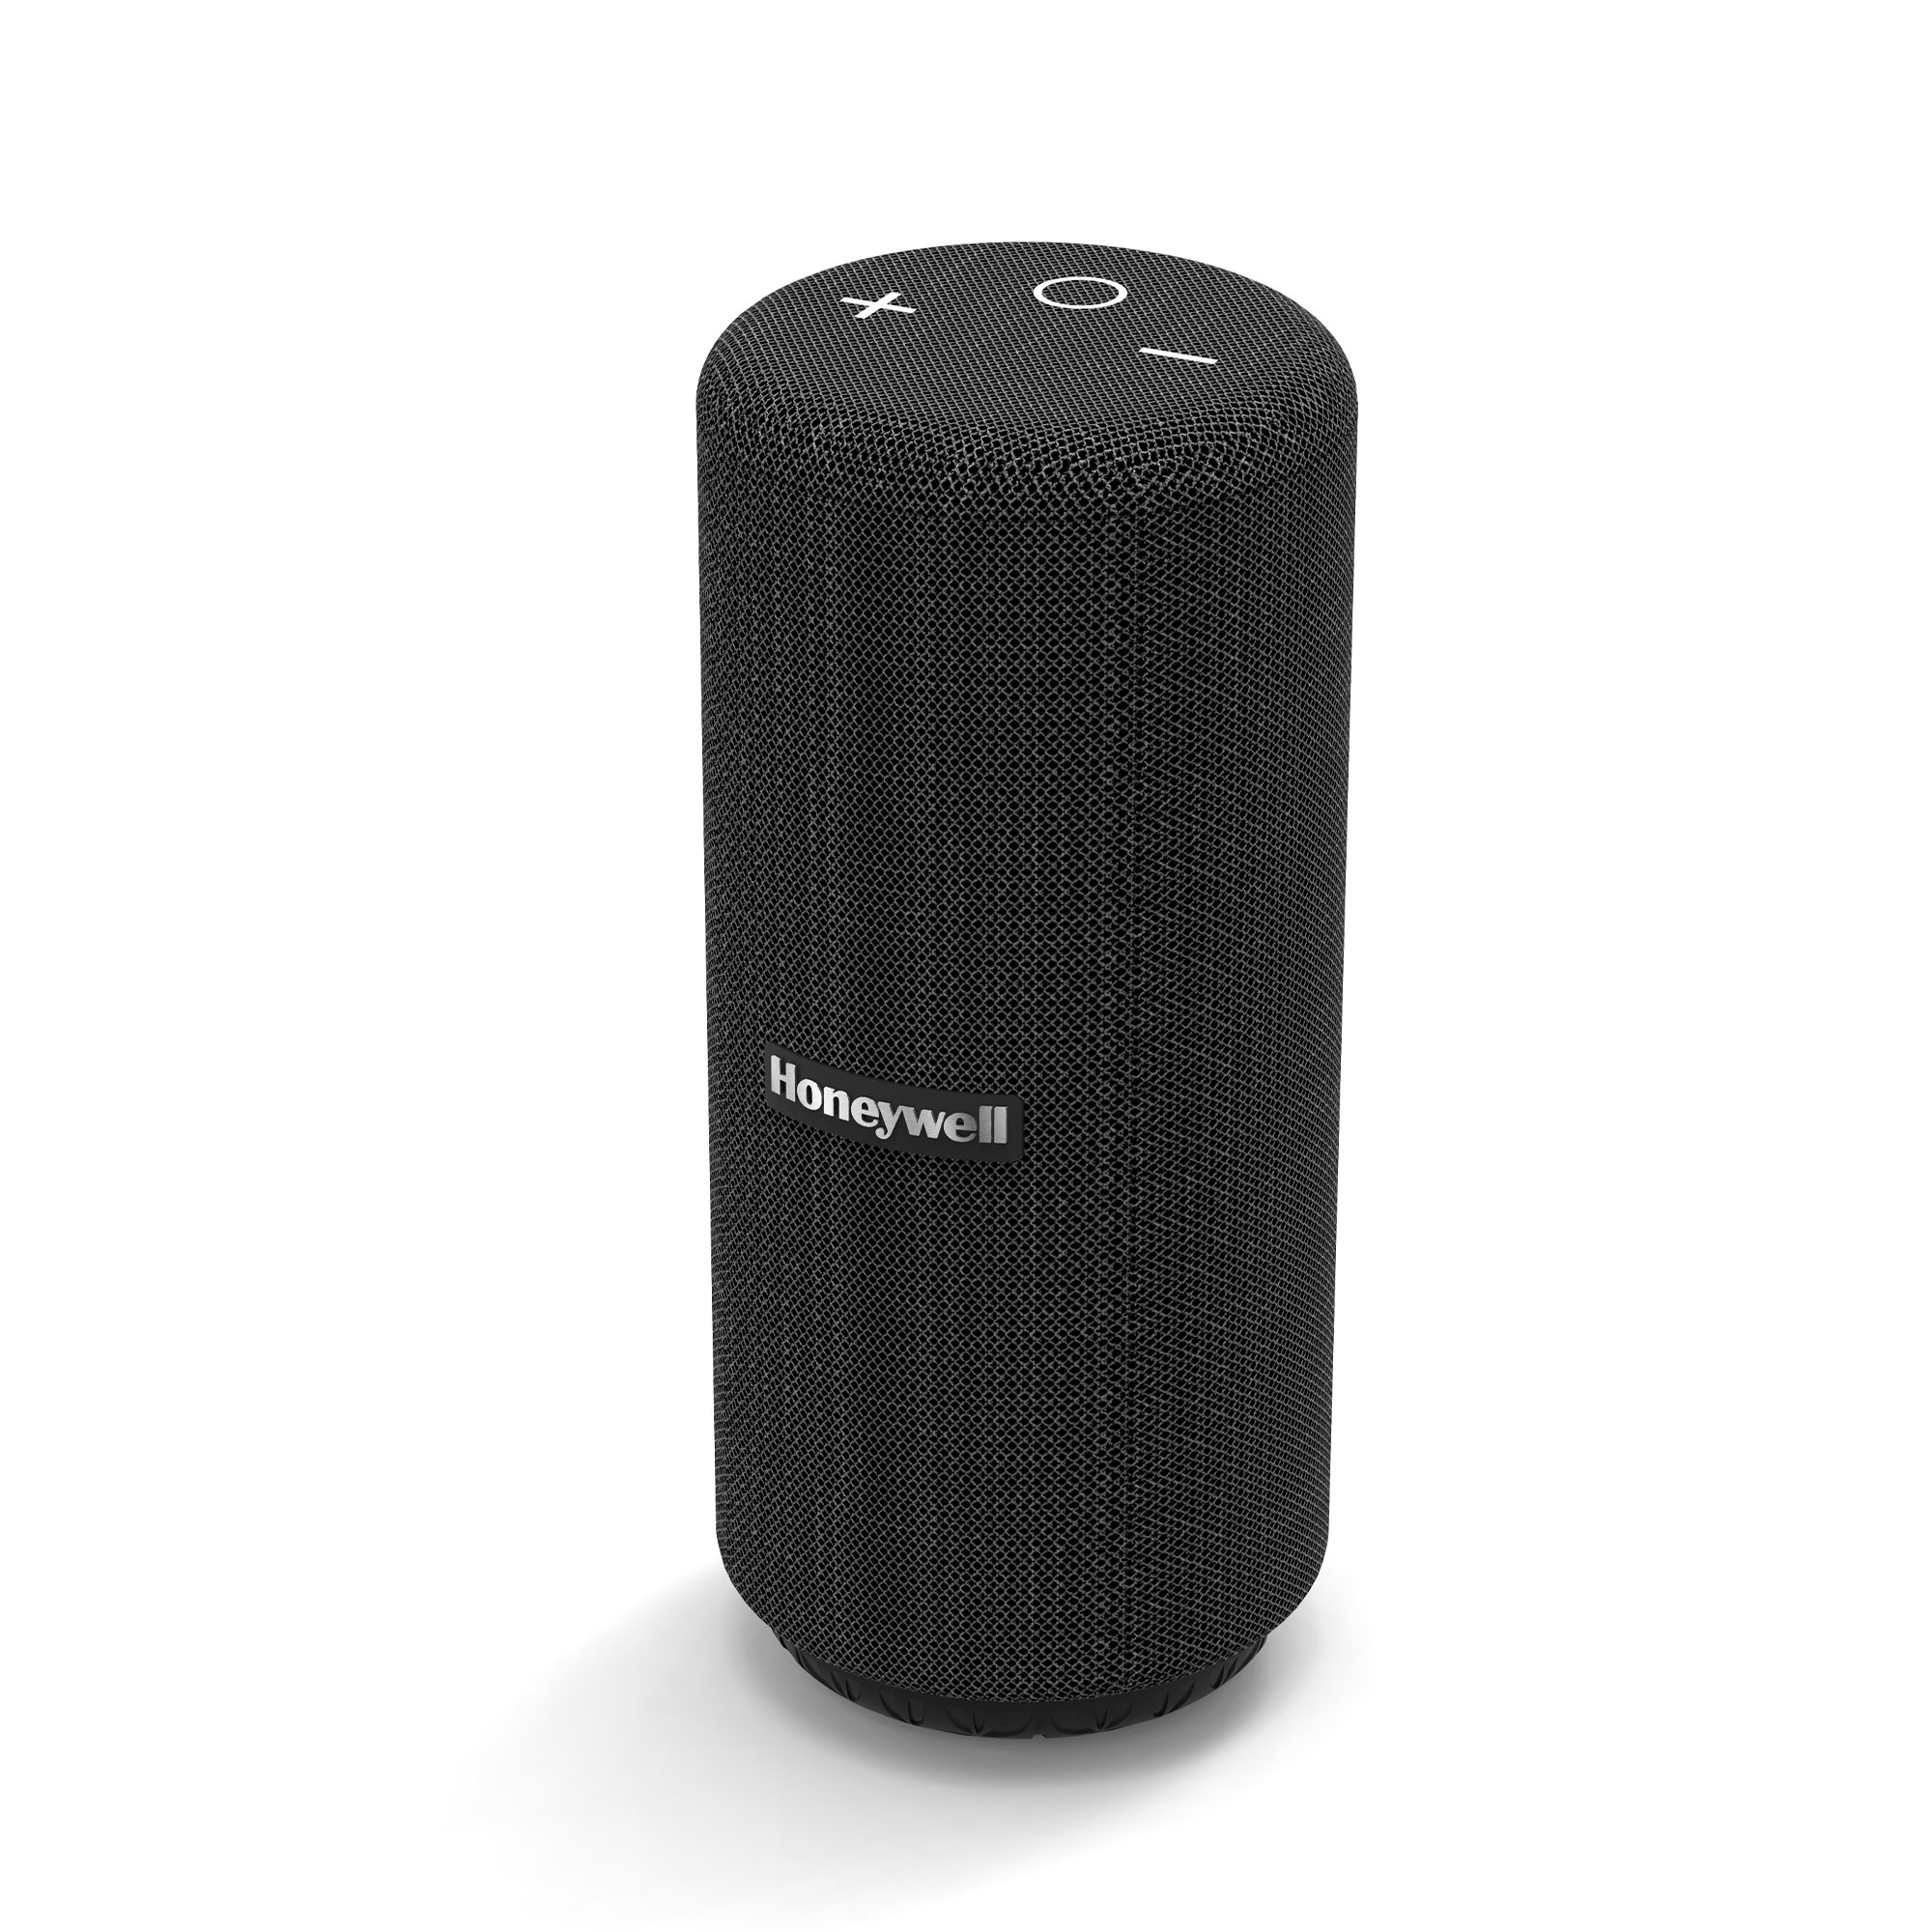 Honeywell Newly Launched Suono P300, Wireless Bluetooth Speaker, 10W - Black